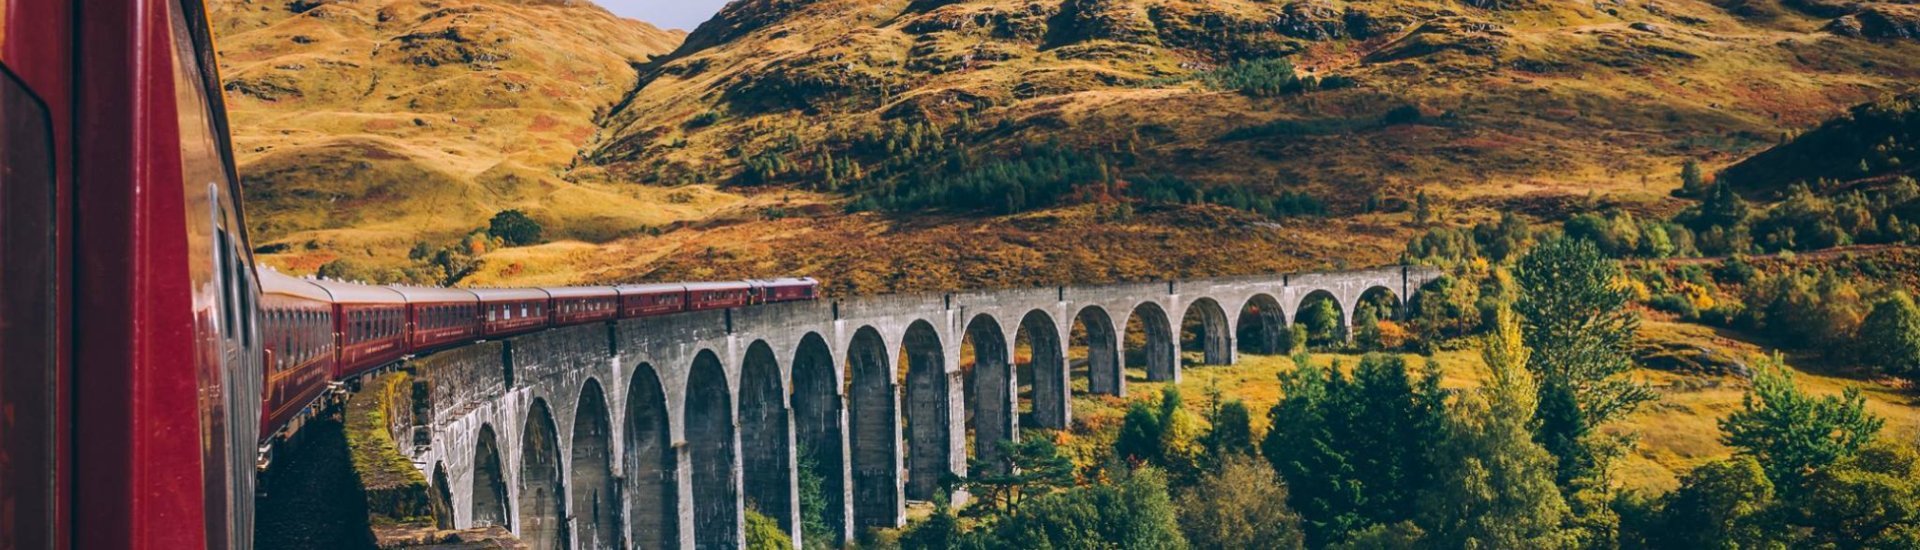 luxury rail journeys in scotland